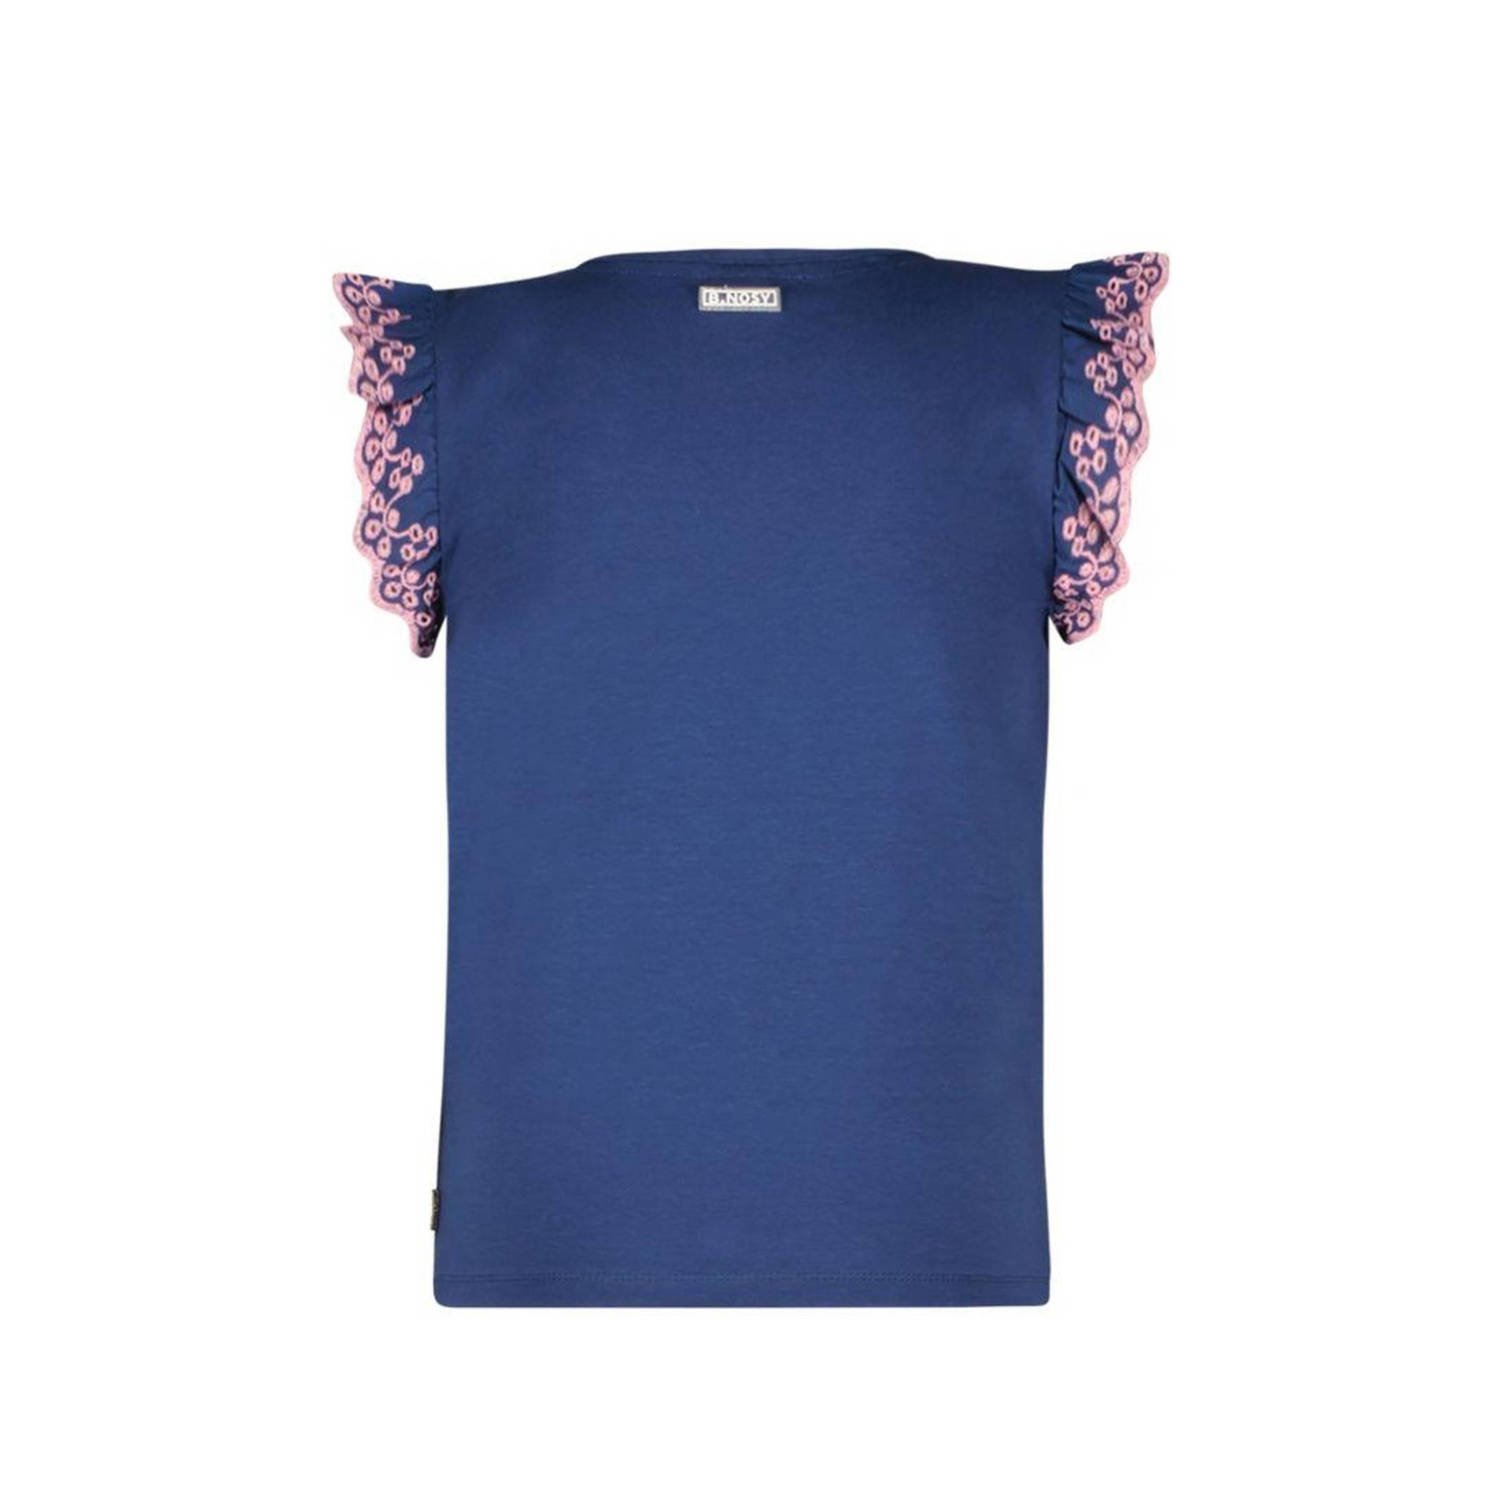 B.Nosy T-shirt Sylvie met printopdruk donkerblauw